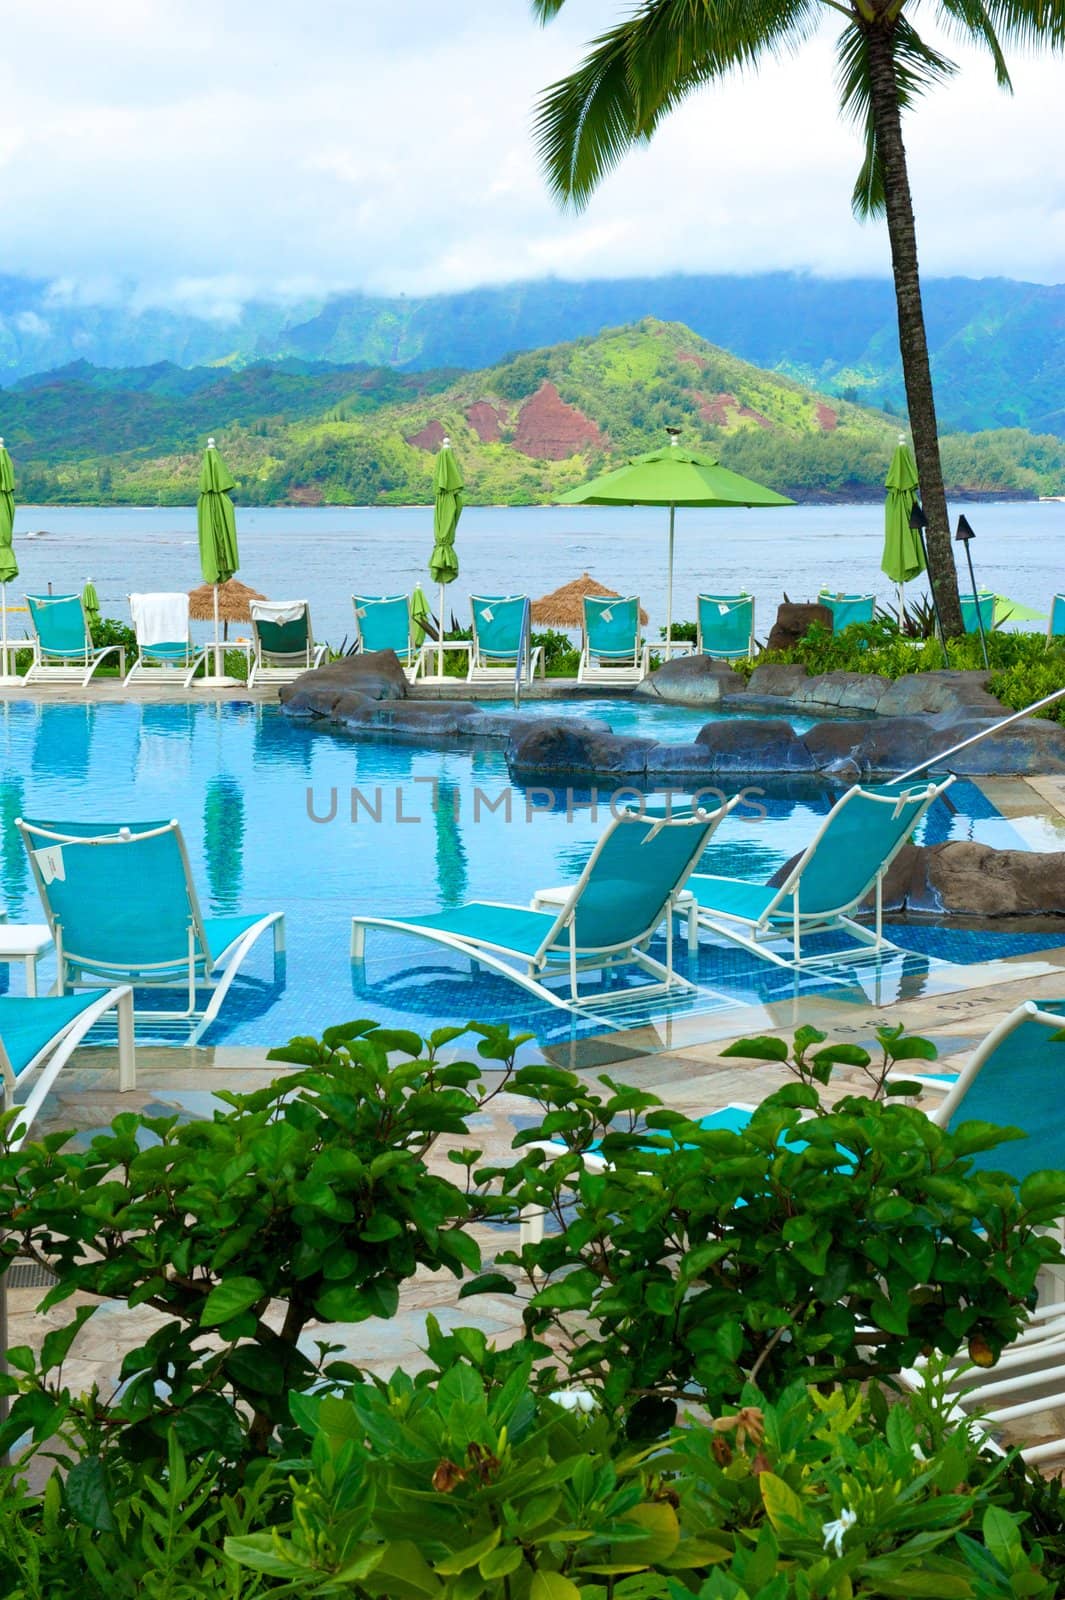 Resort Pool on the Island of Kauai by pixelsnap